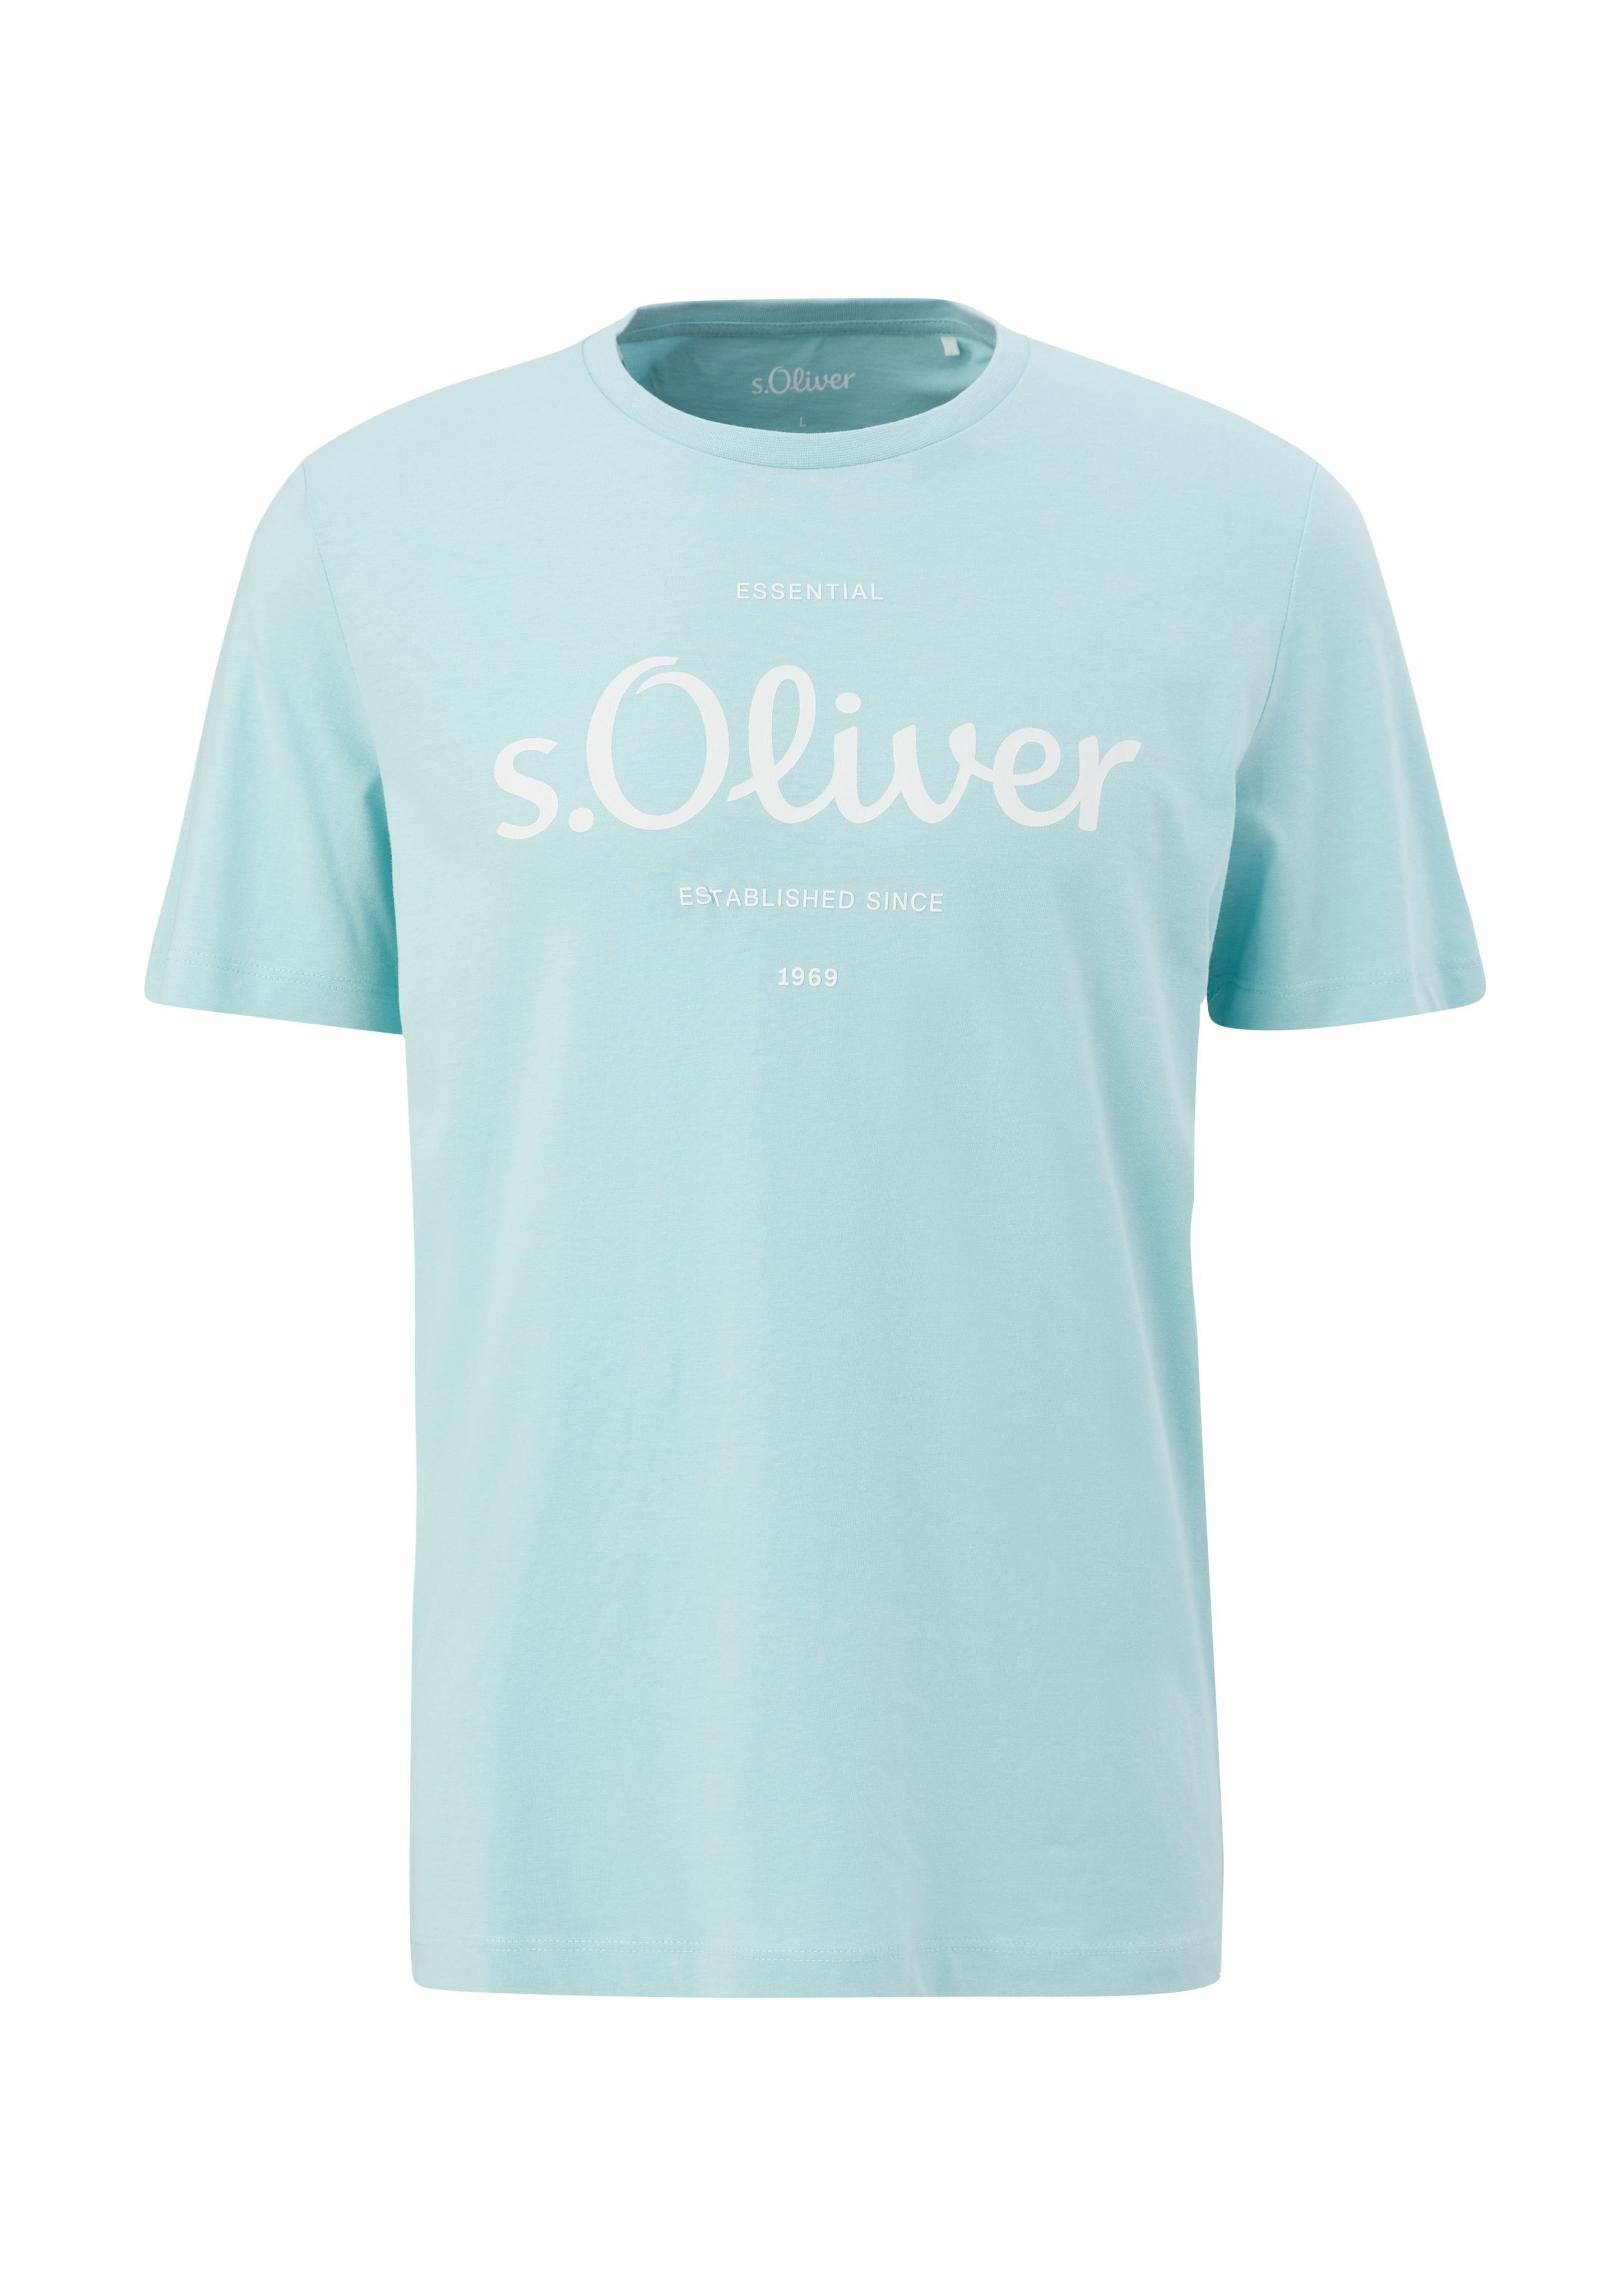 s.Oliver T-Shirt Blau